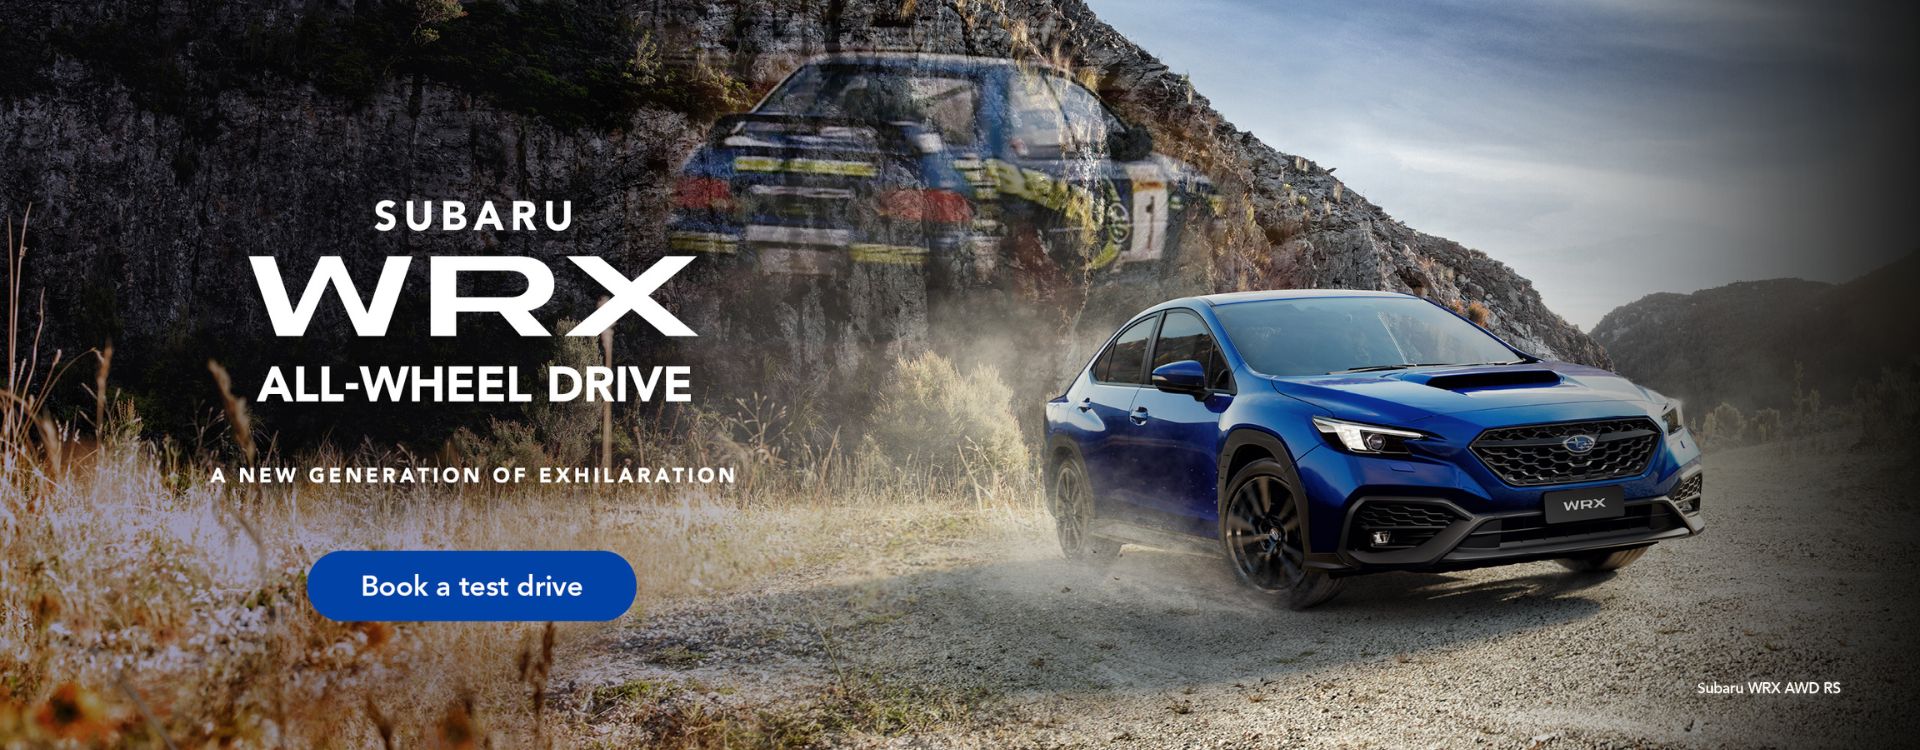 Subaru WRX All-Wheel Drive - A New Generation of Exhiliration